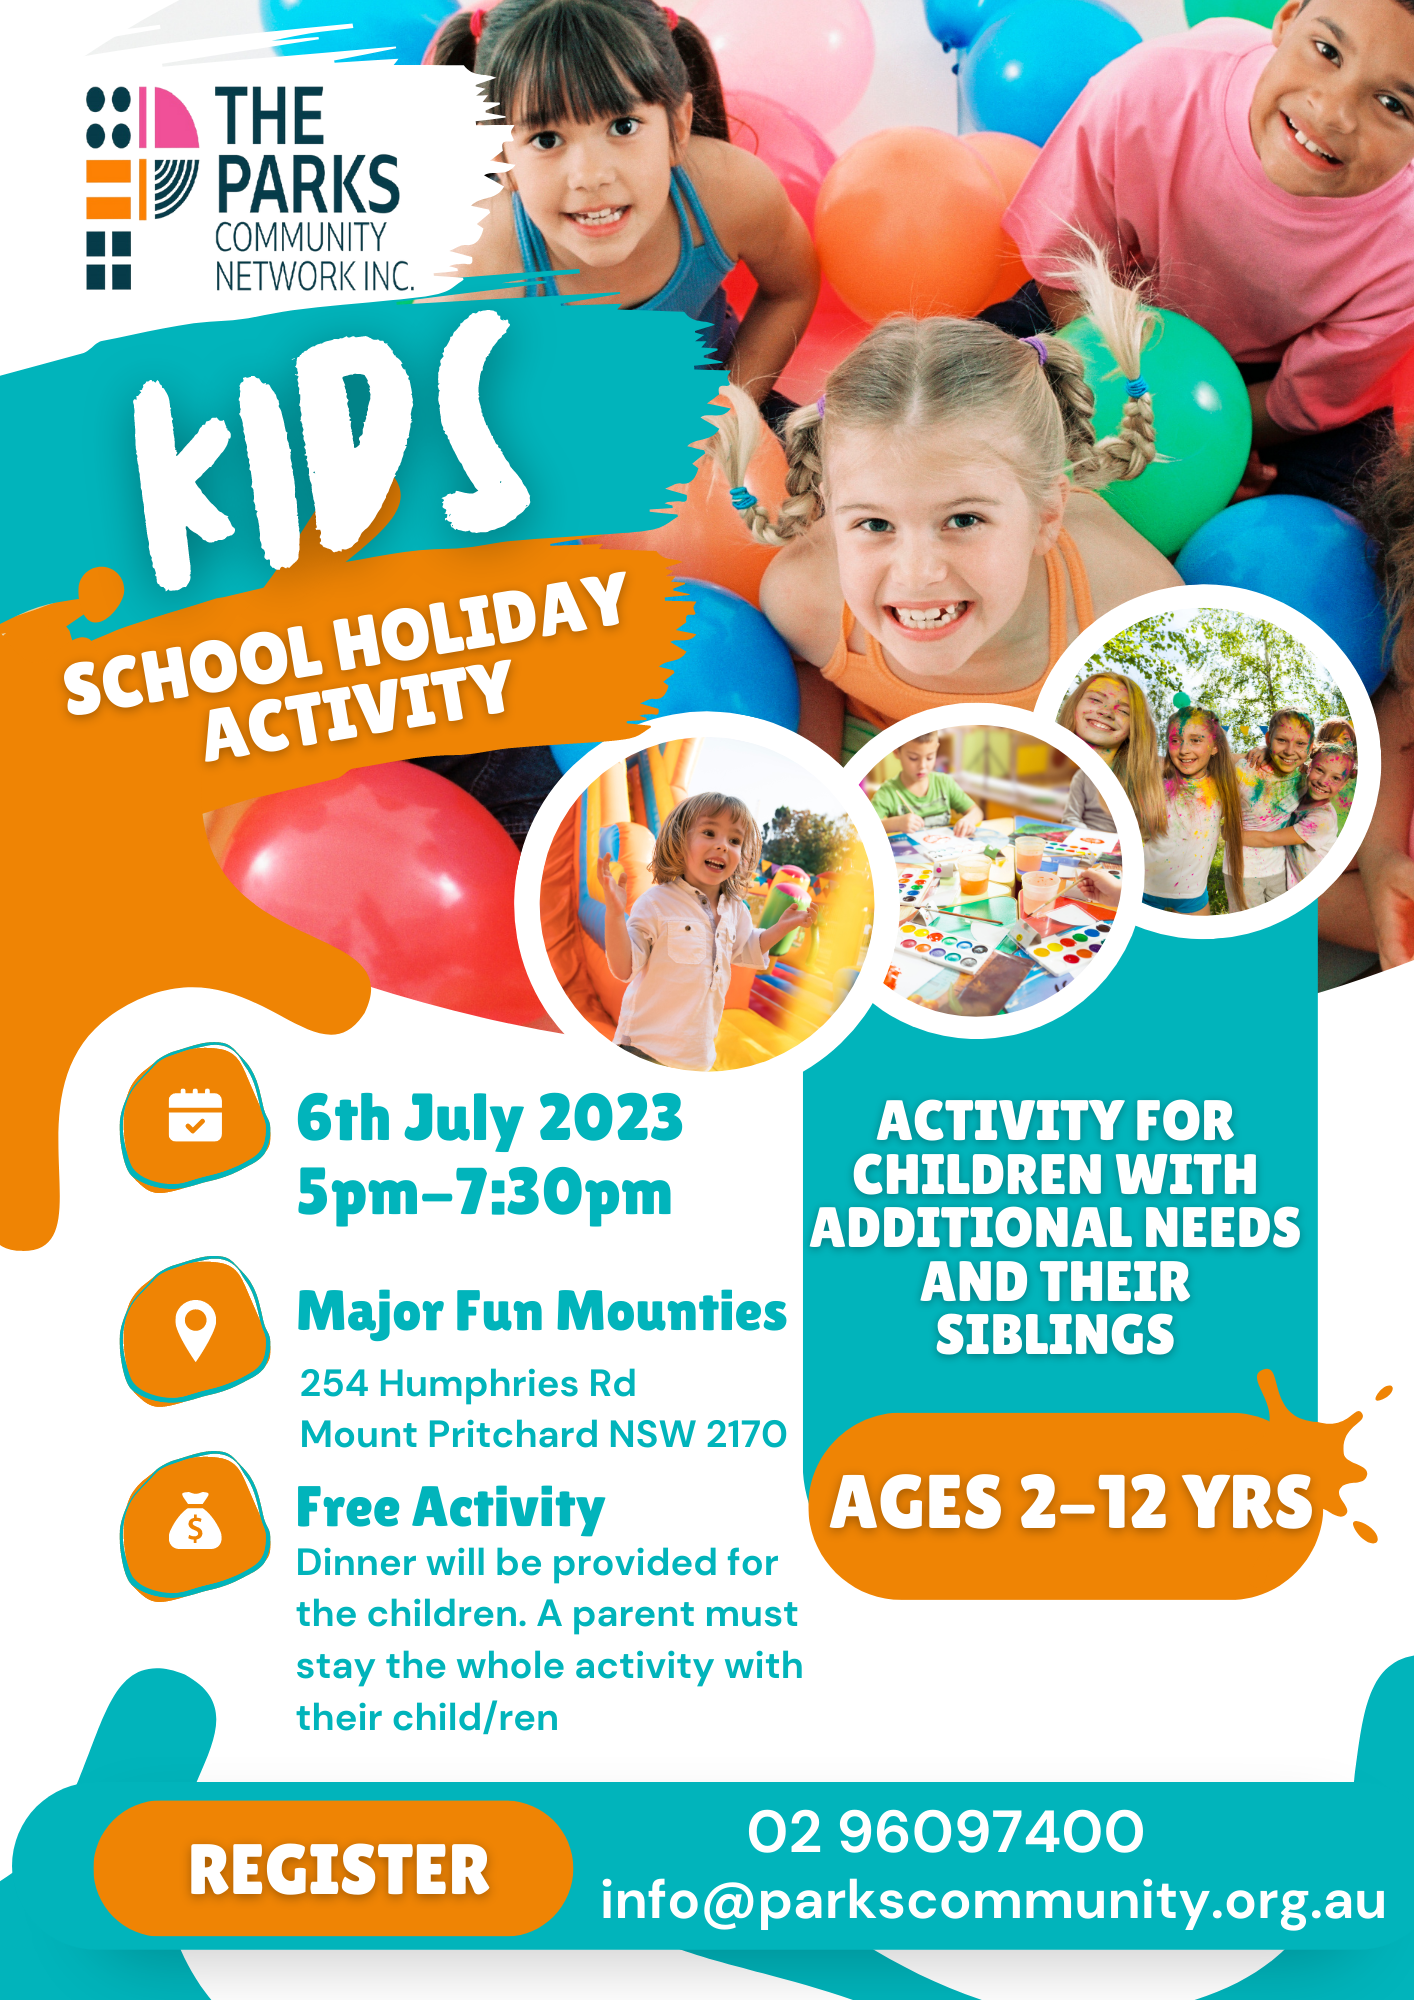 Kids School Holiday Activity July 2023 (1)